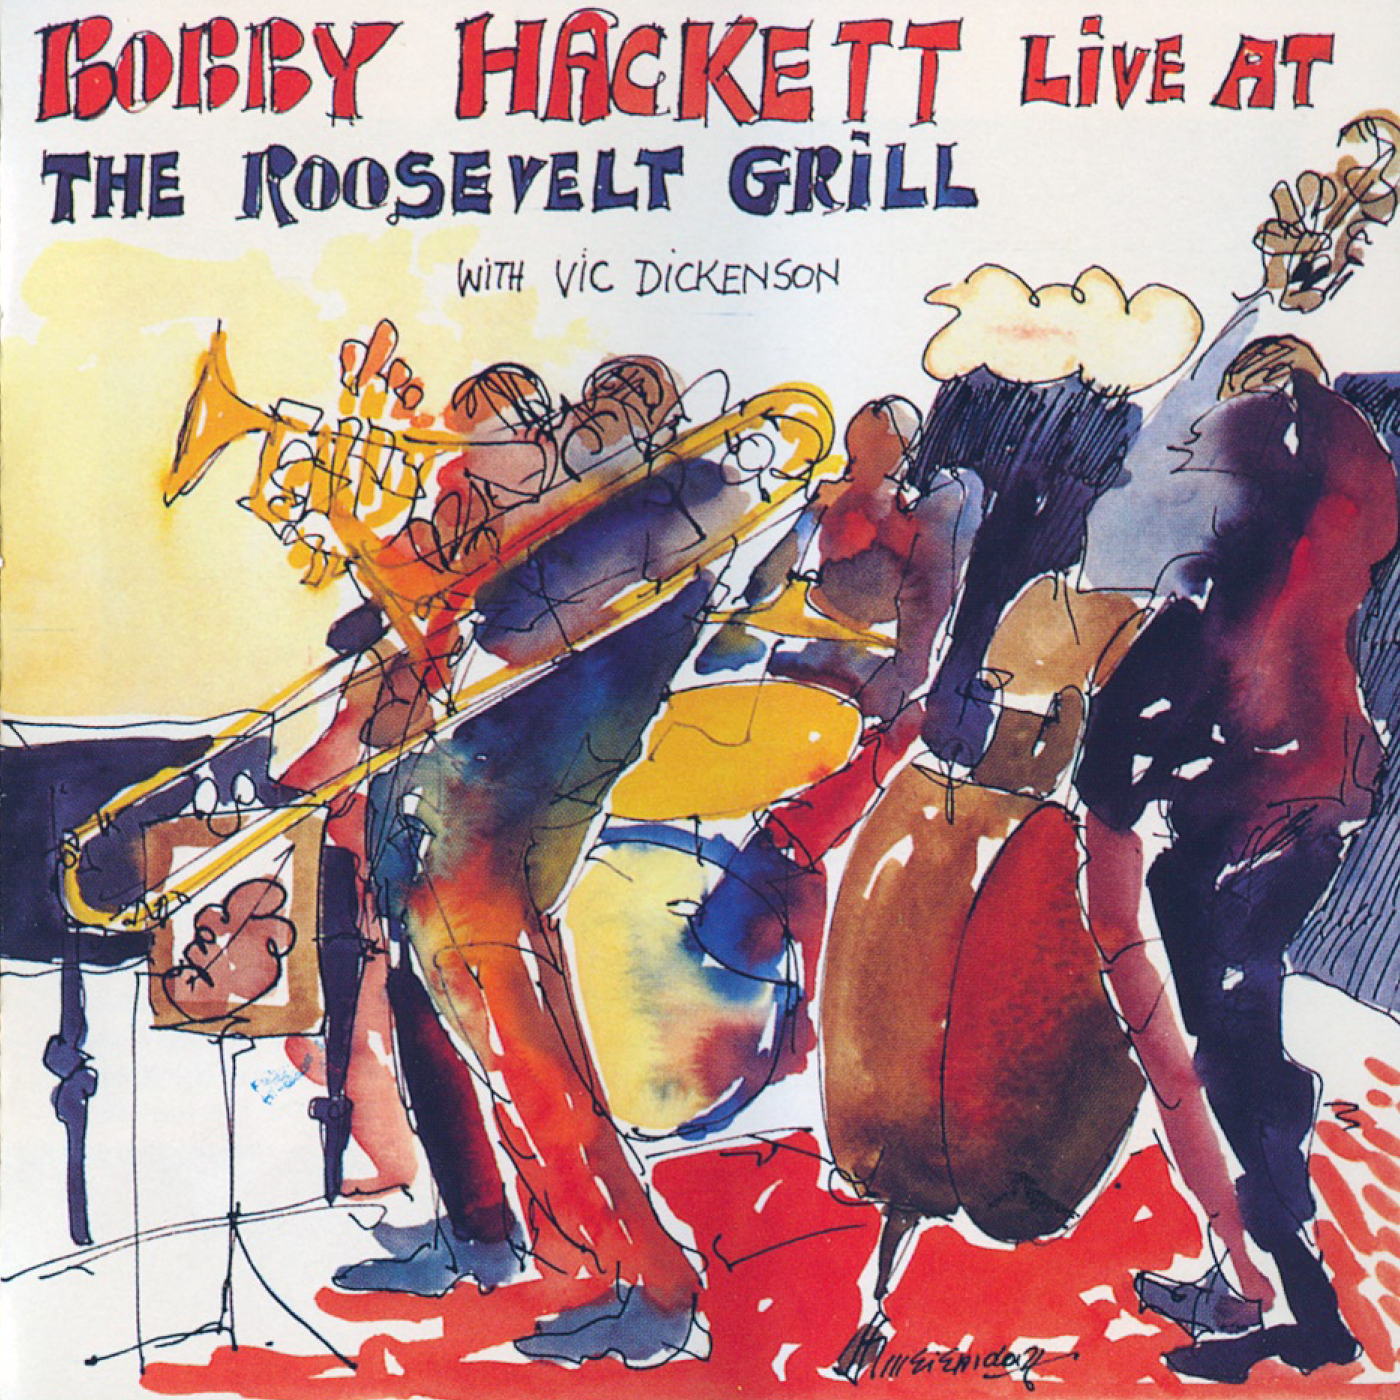 105 – Live at the Roosevelt Grill (Vol. 1) BOBBY HACKETT VIC DICKENSON